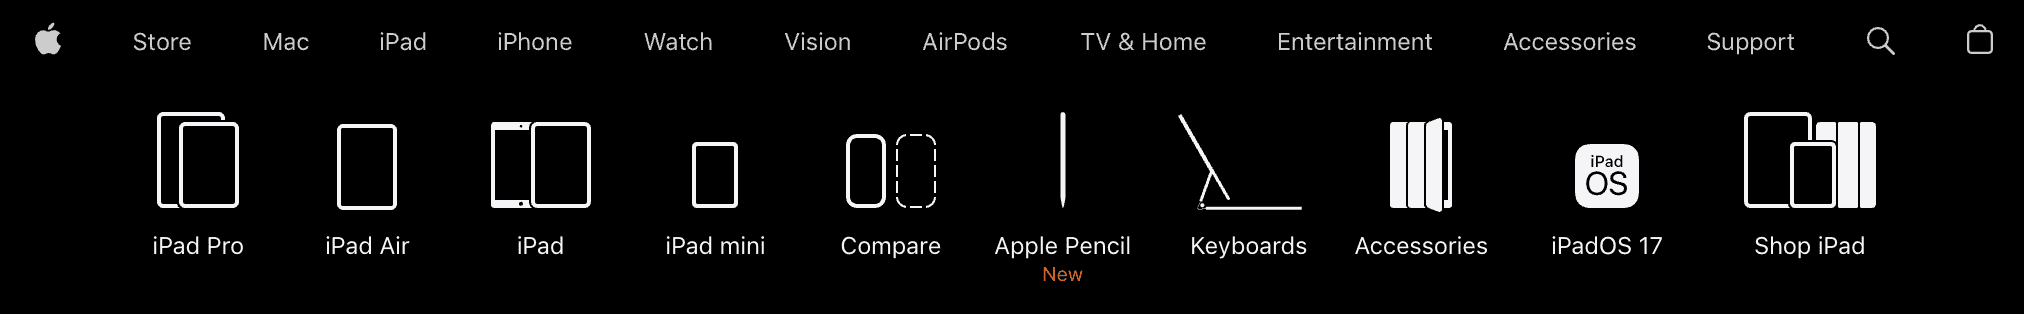 iPad options